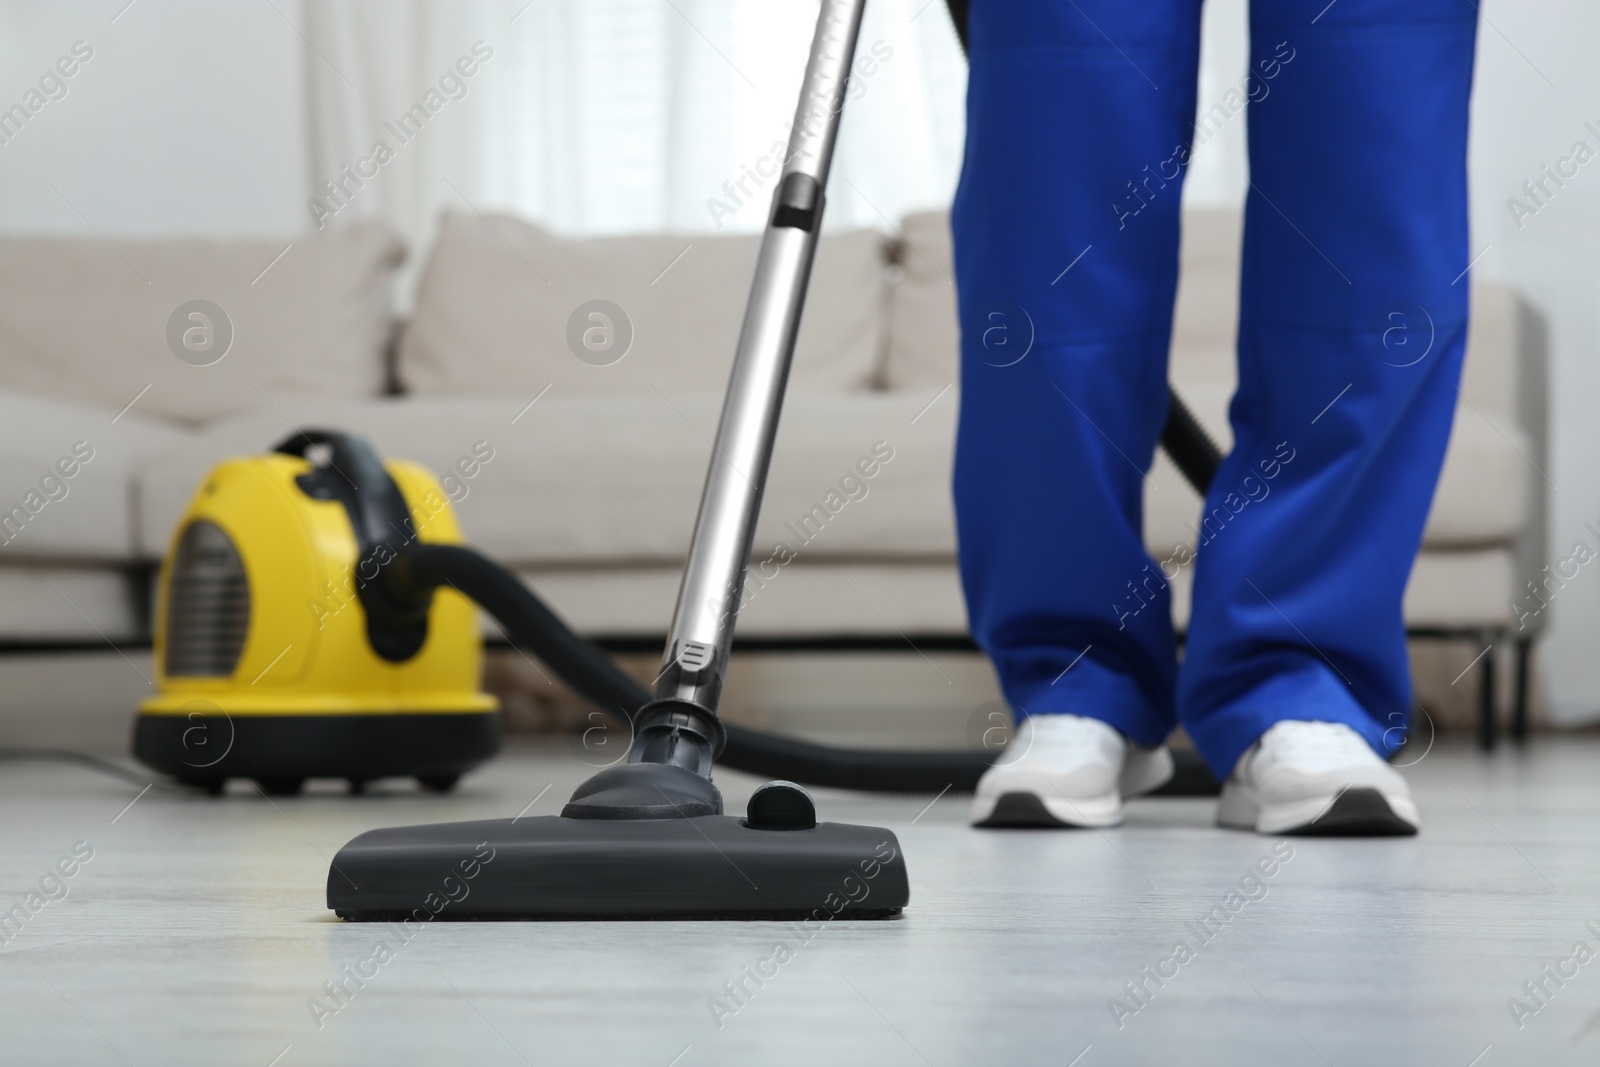 Photo of Janitor in uniform vacuuming floor indoors, closeup